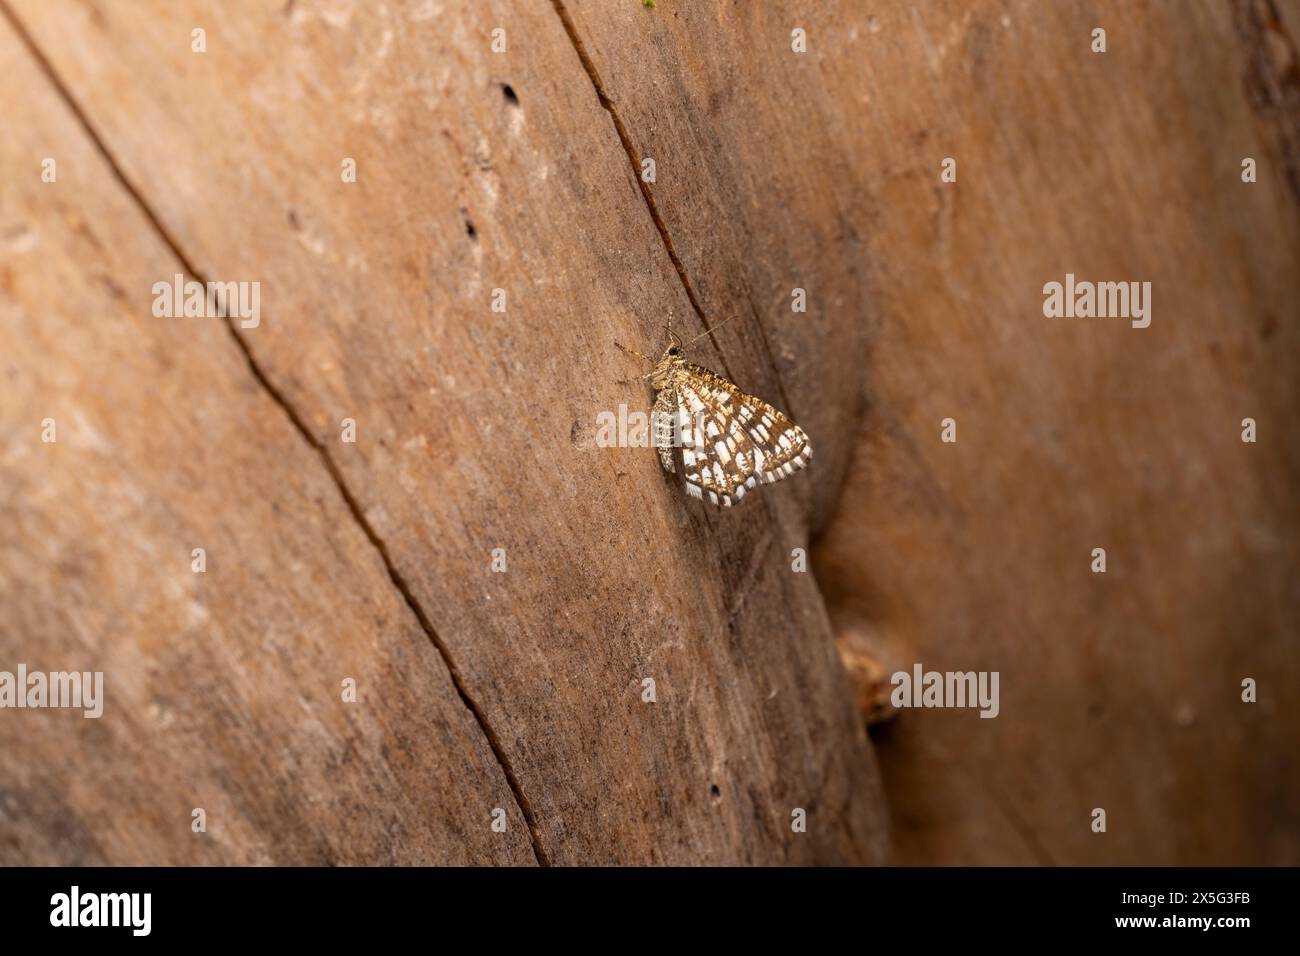 Chiasmia clathrata Family Geometridae Genus Chiasmia Latticed heath moth wild nature insect wallpaper, picture, photography Stock Photo